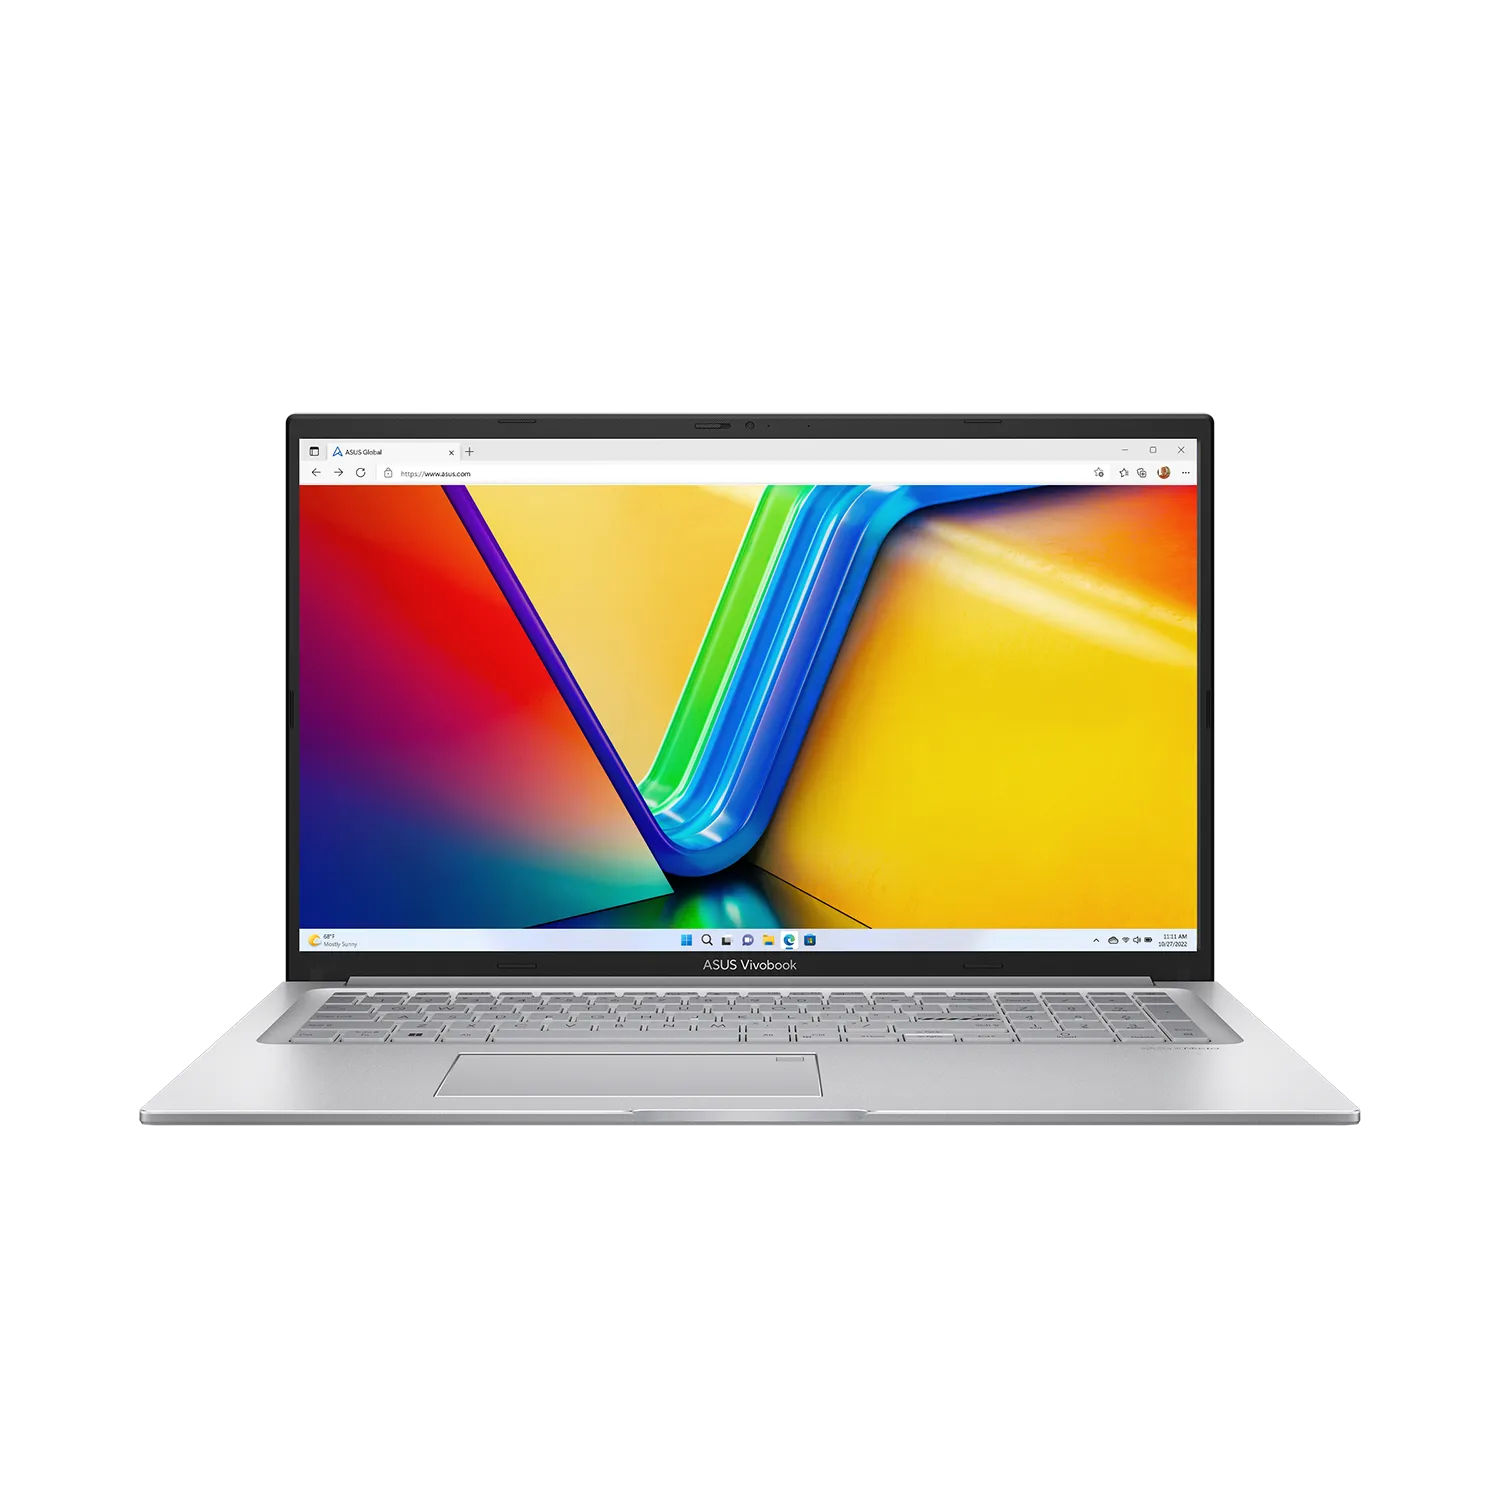 ASUS Vivobook X-Series, fertig 24 GB 2021 17,3 Zoll aktiviert, Cool Office und installiert RAM, Pro, Notebook GB SSD, Display, Silver 500 mit